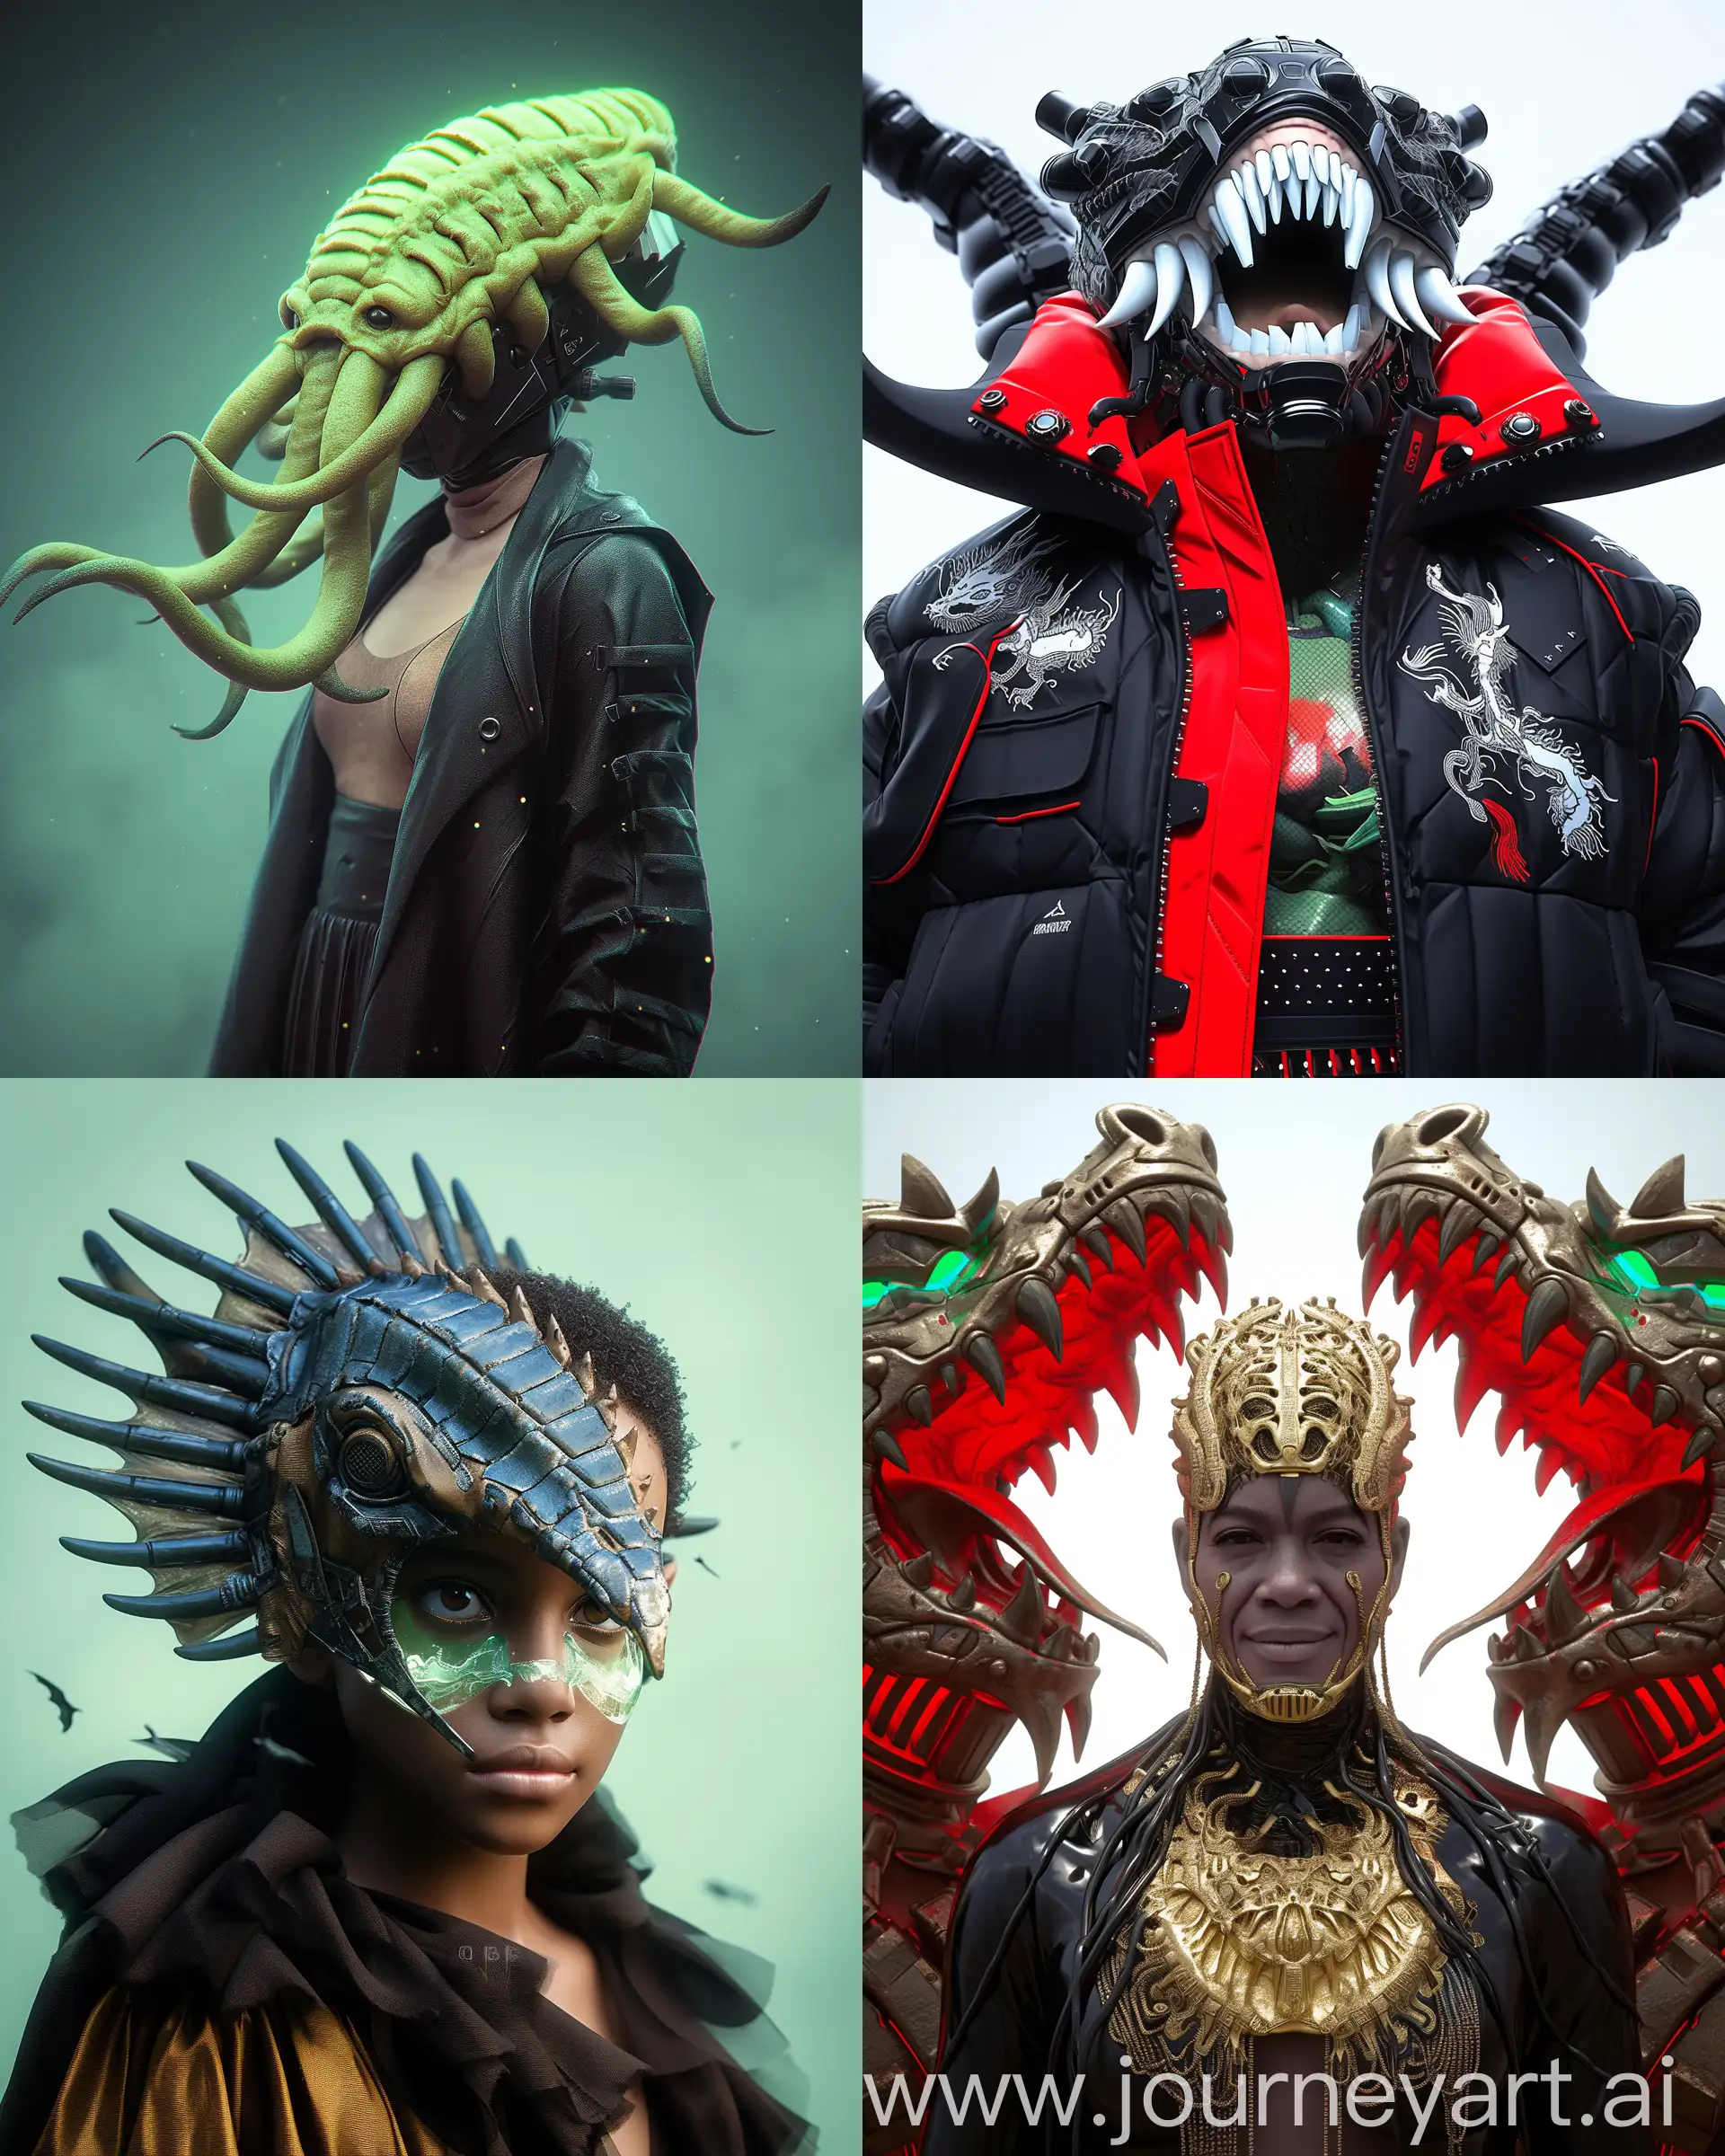 HyperRealistic-Cyberpunk-Fashion-Editorial-Afrofuturistic-Dragon-Helmet-CloseUp